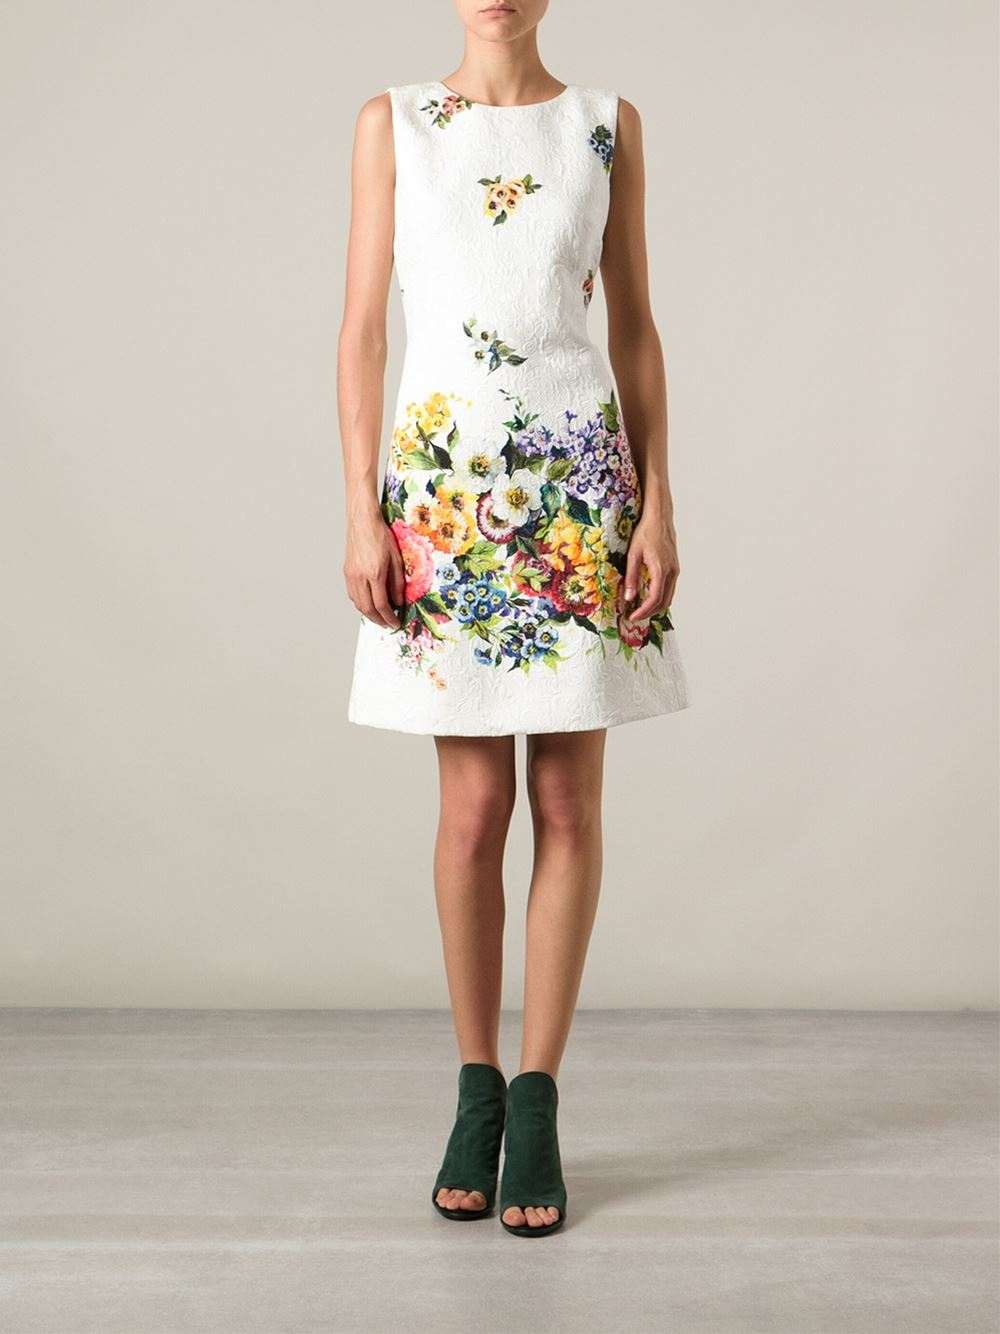 Dolce & Gabbana Floral Print Dress in White | Lyst